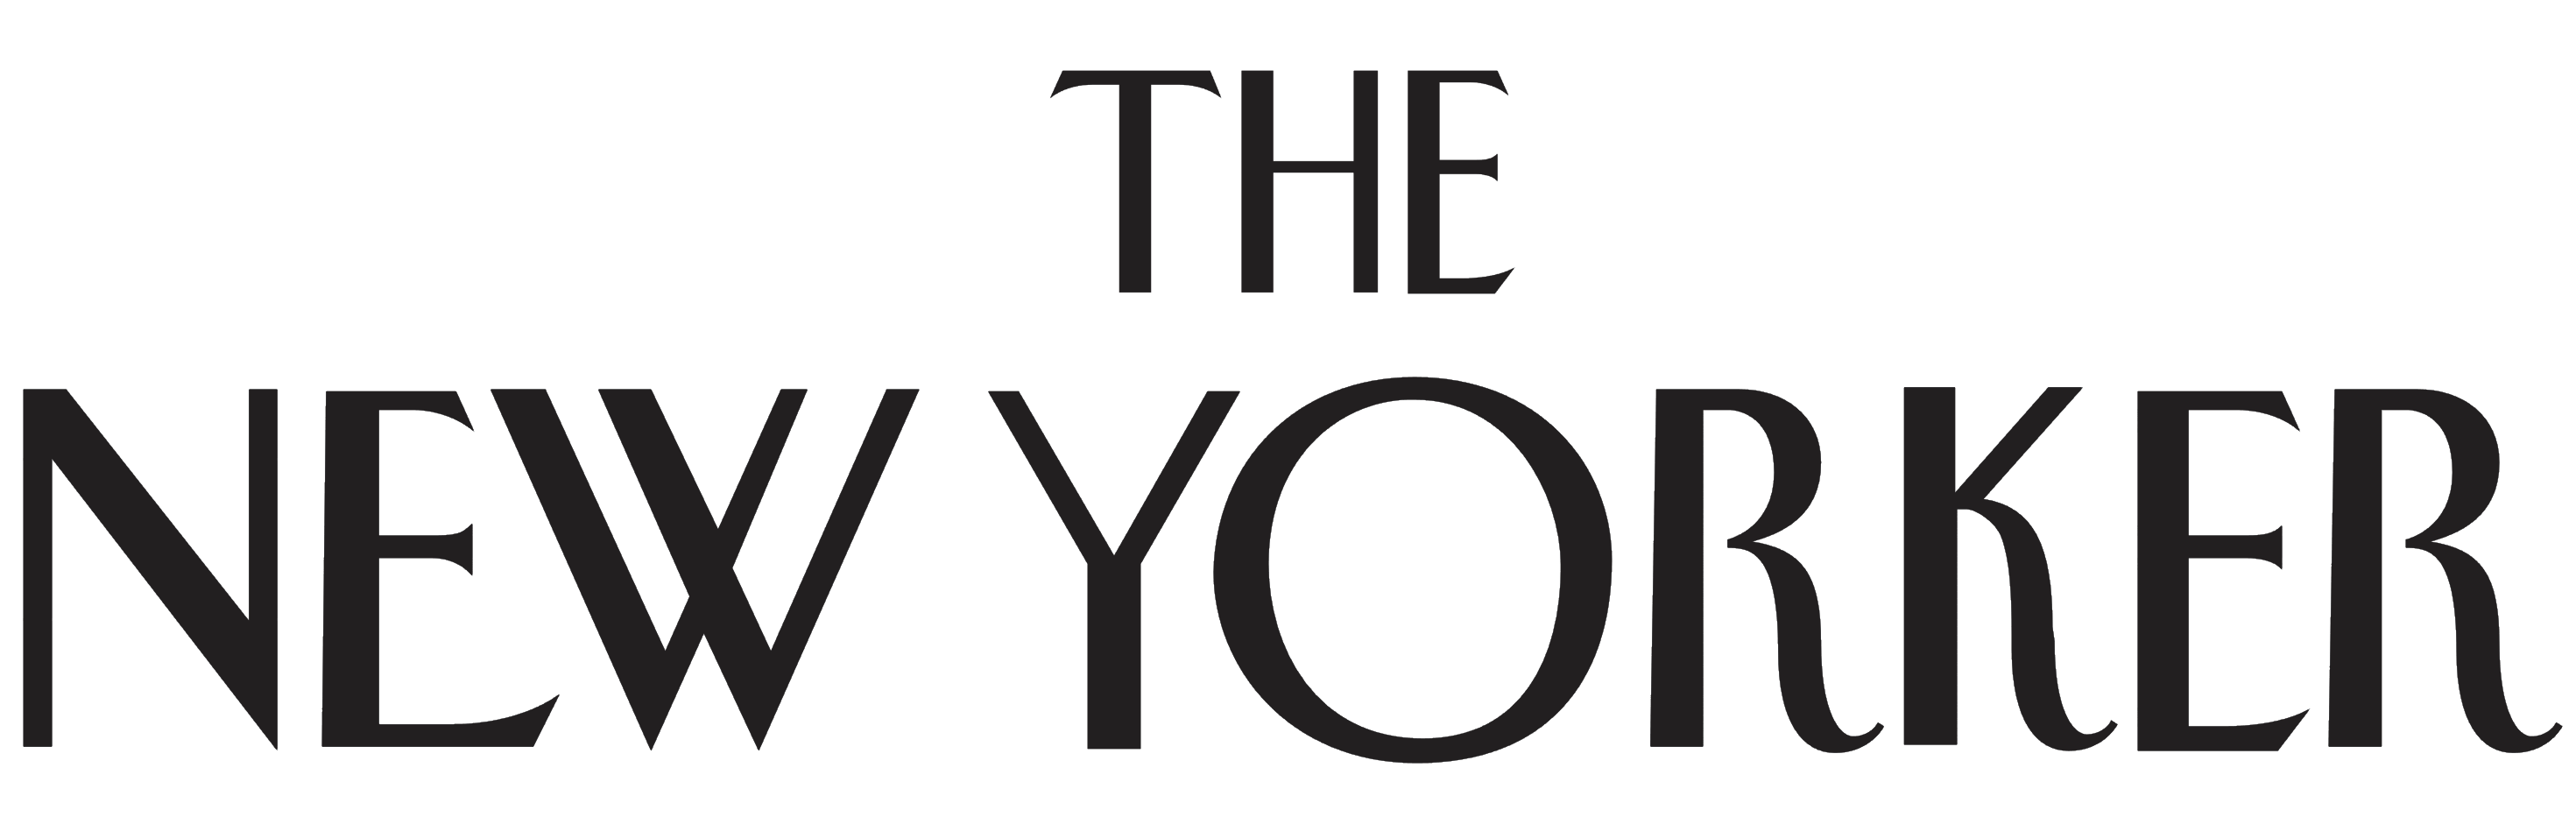 New Yorker logo (NewYorker)